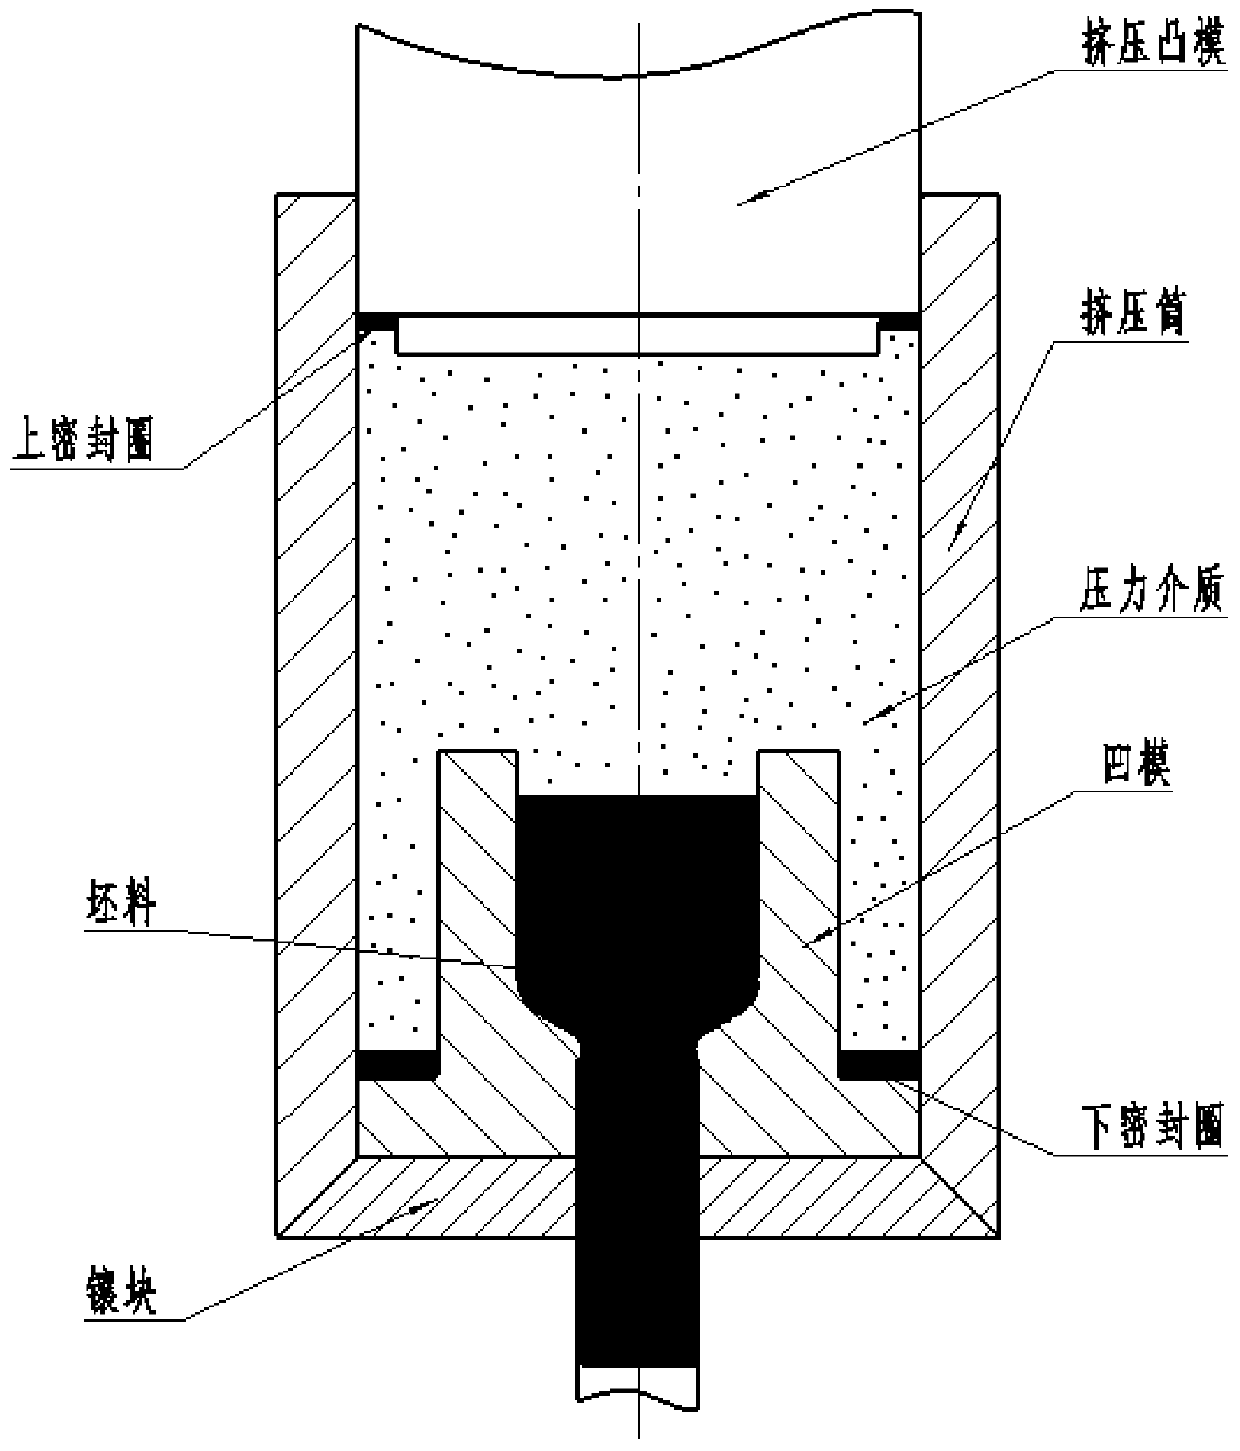 Low-temperature preparation method of fine-grained material for drug-type cap